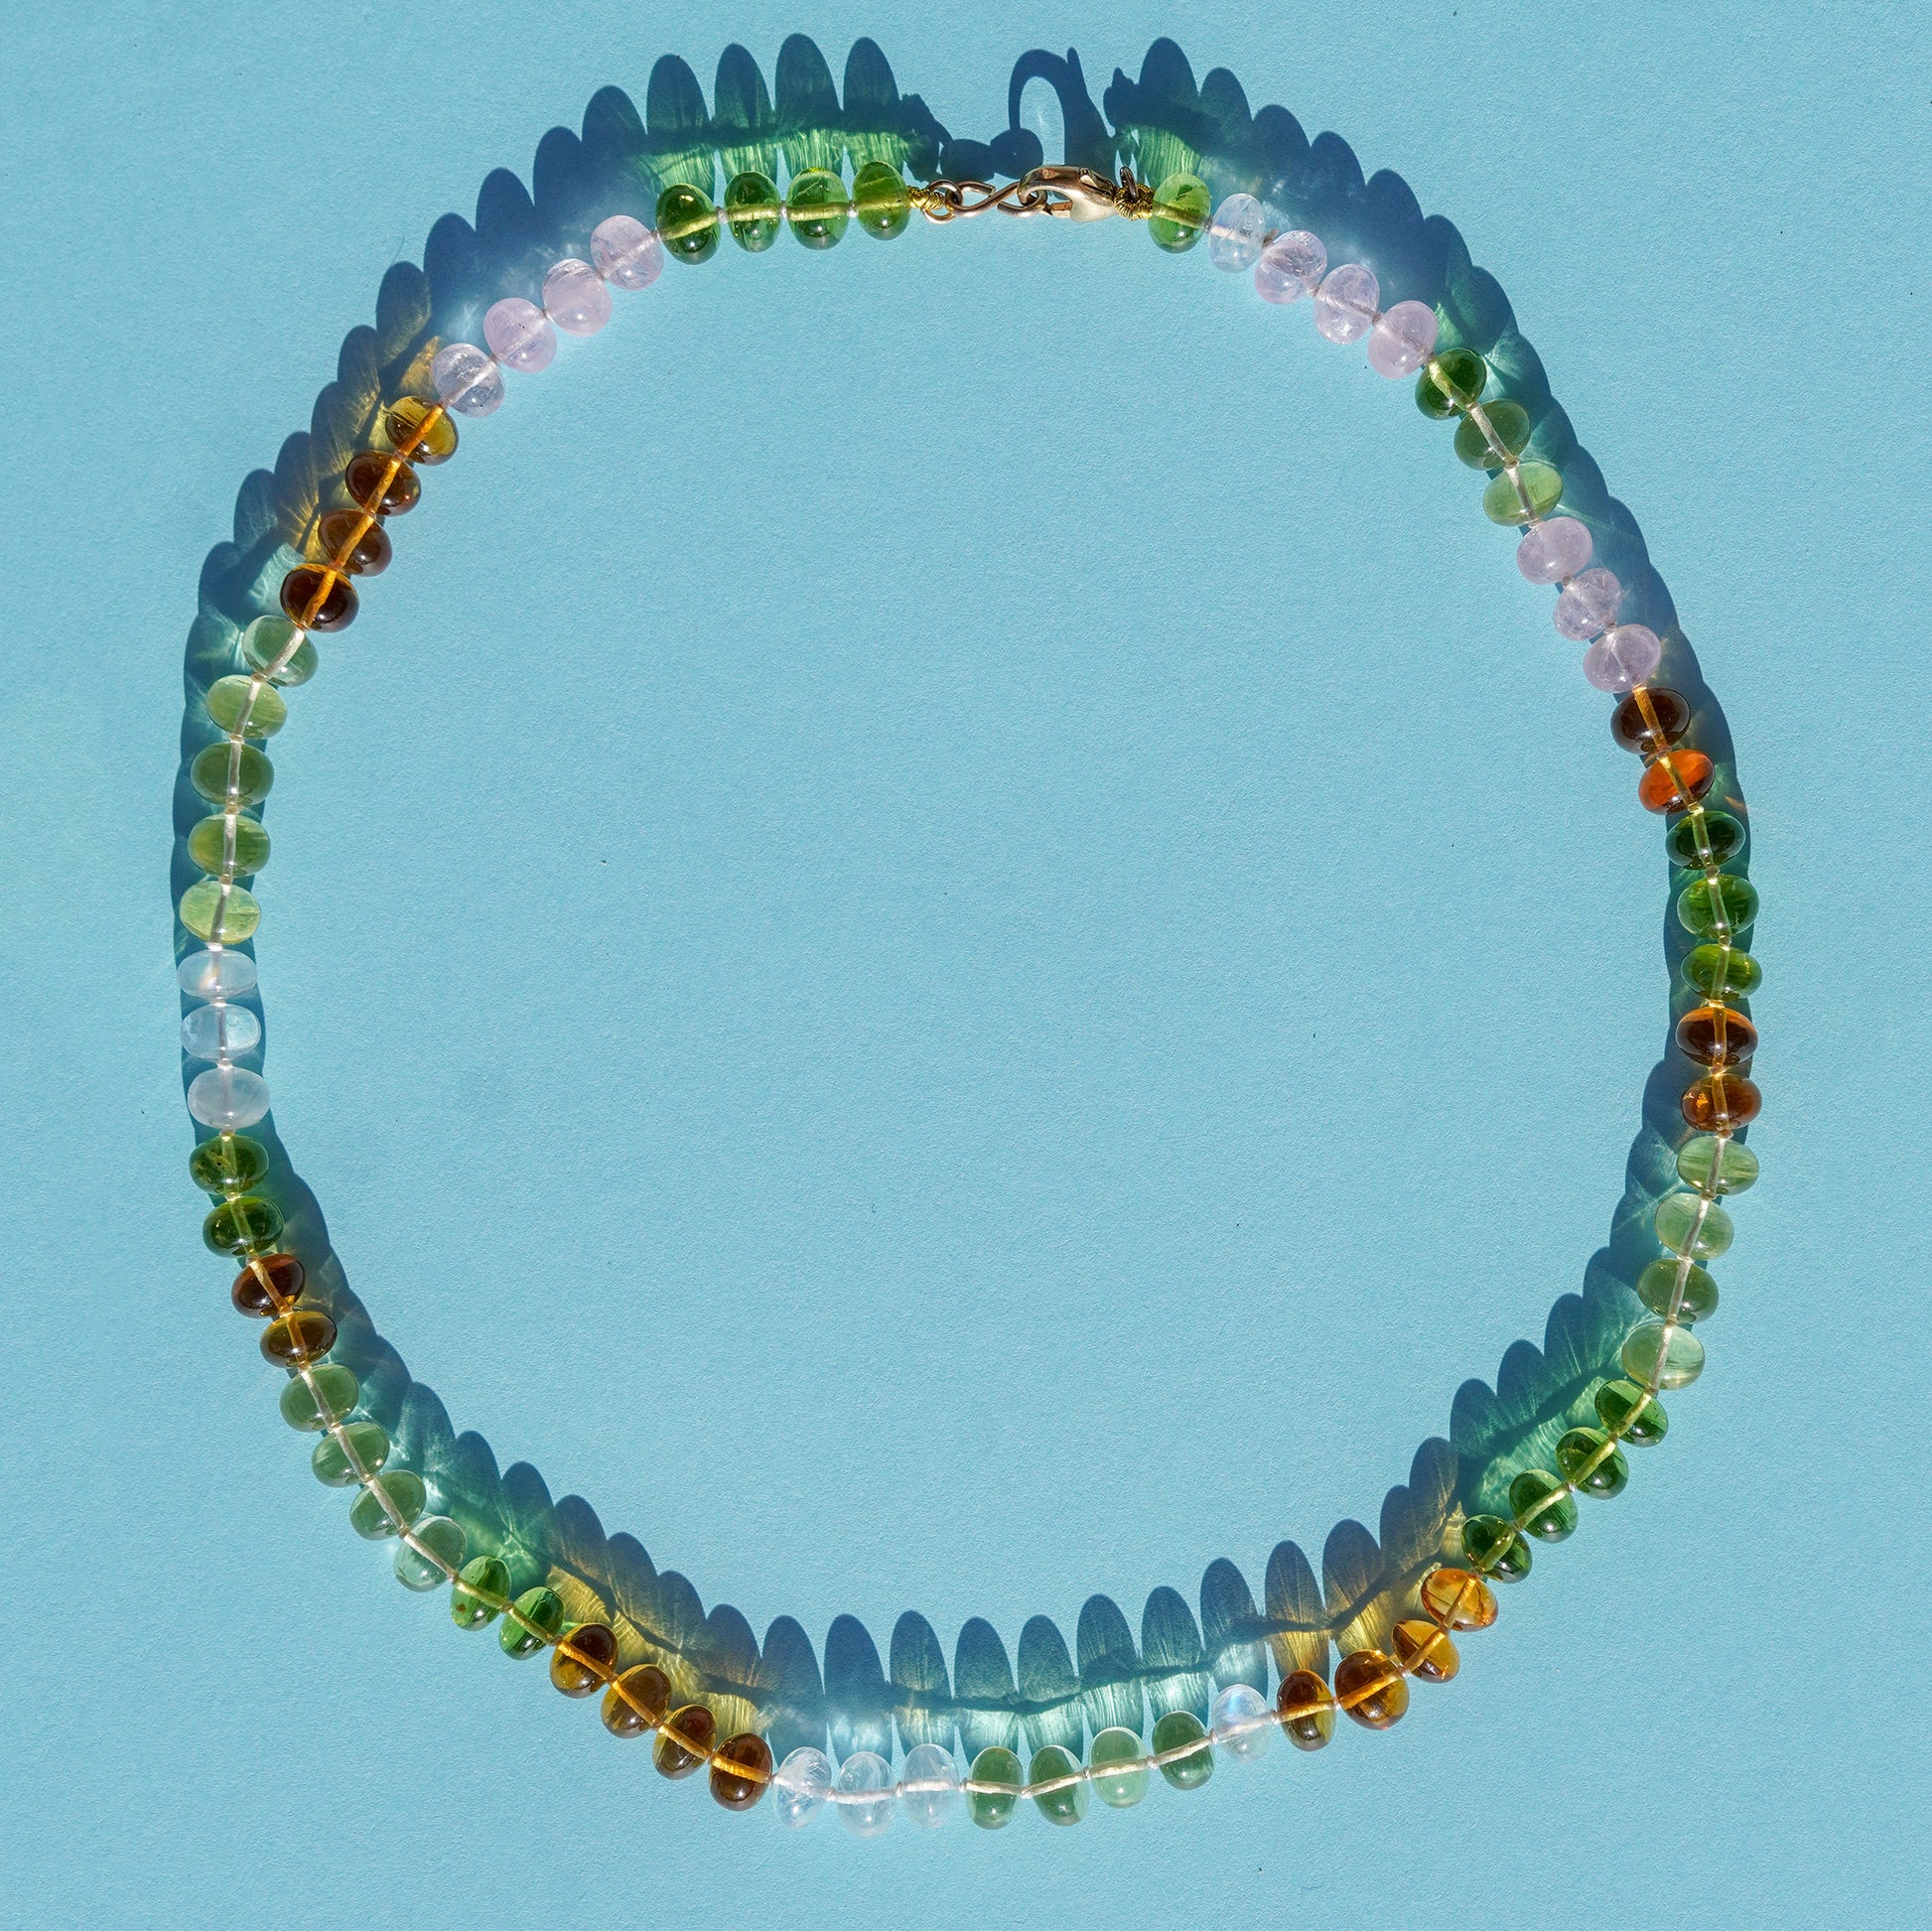 rainbow candy necklace silk knotted peridot morganite lemon quartz moonstone 14k